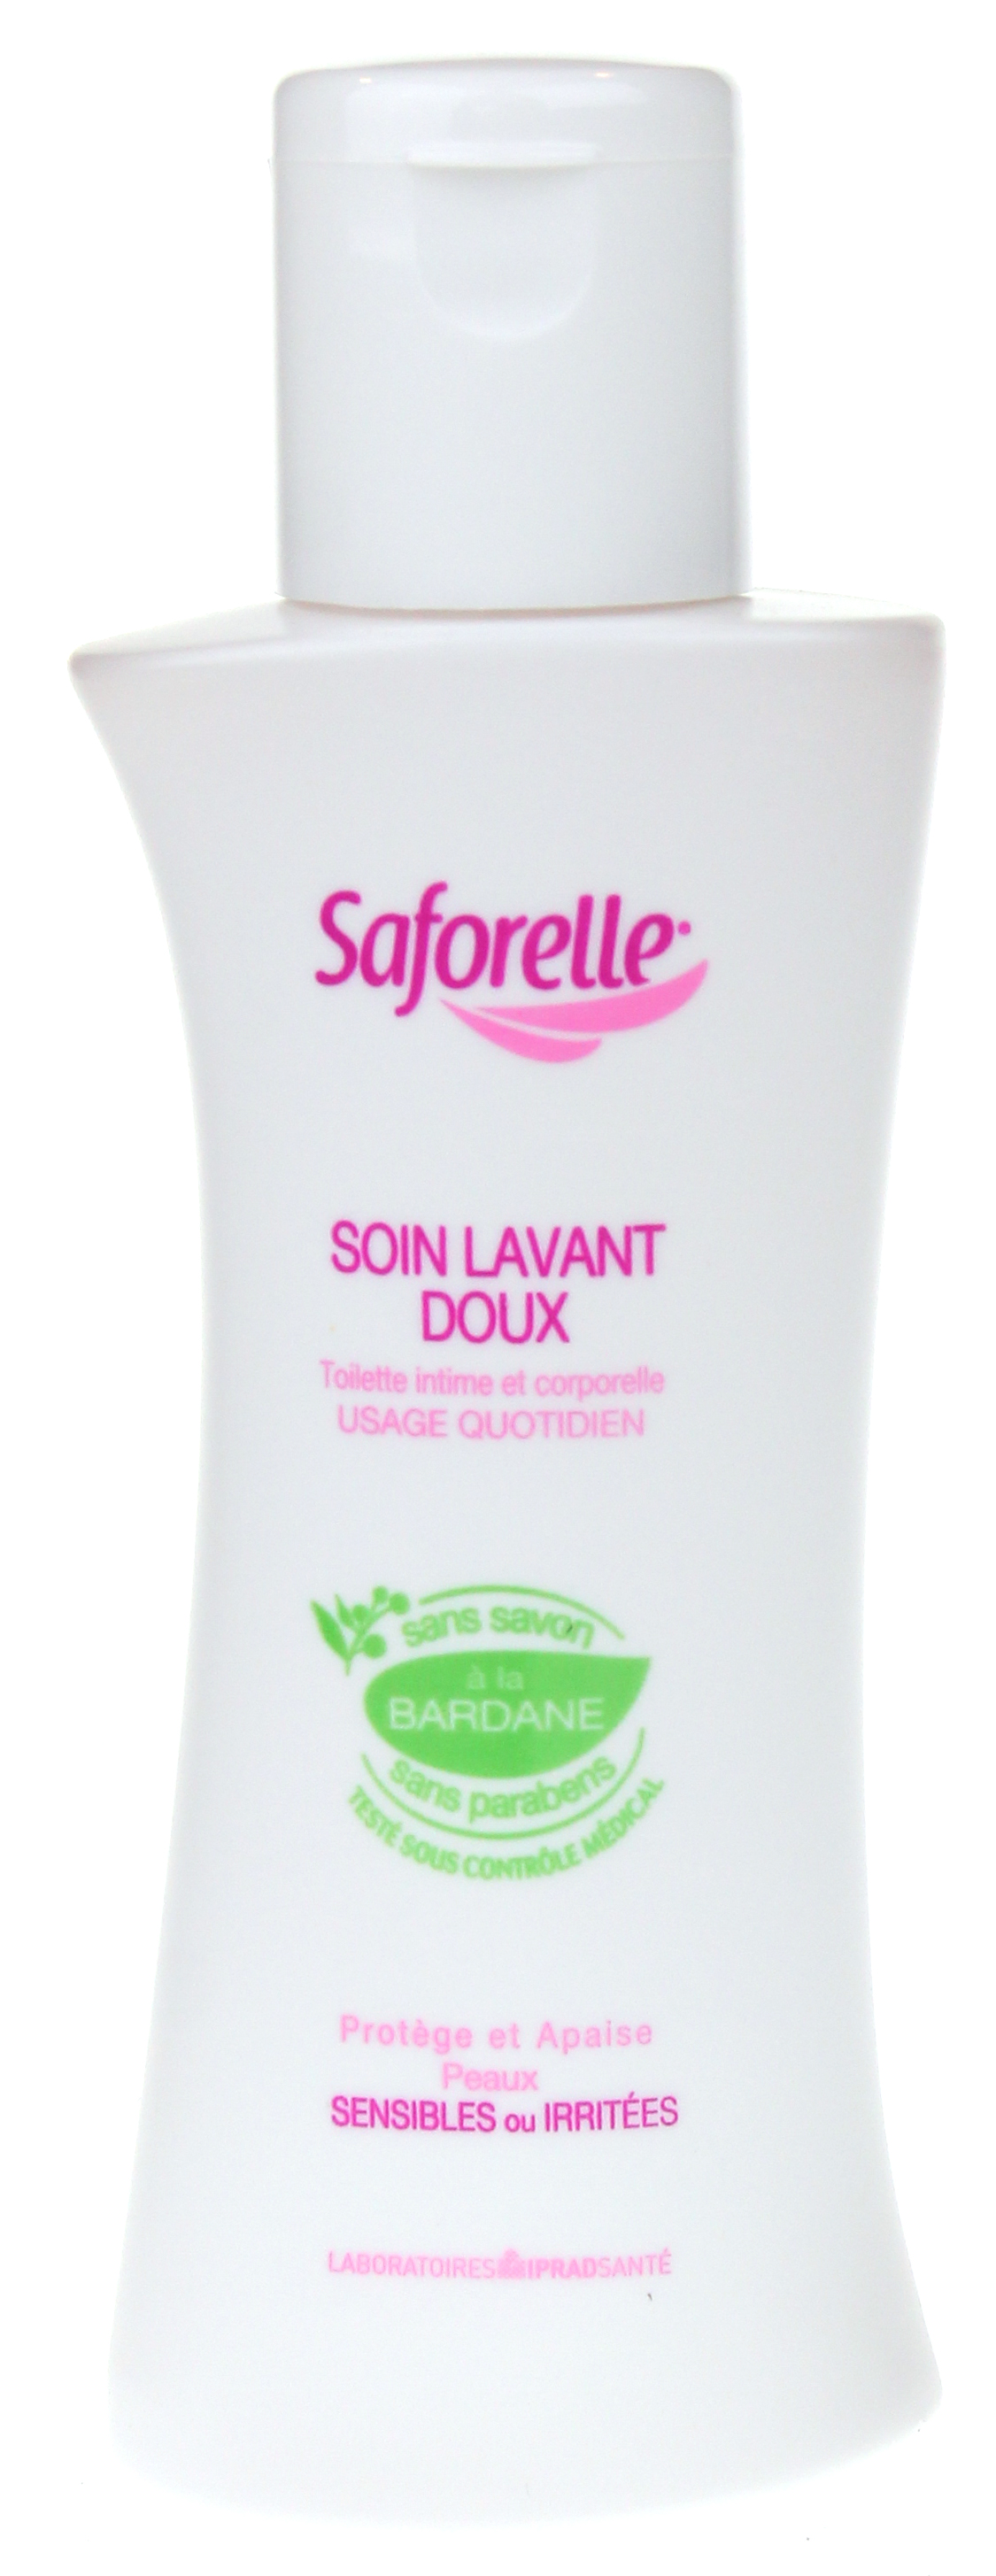 Saforelle Soin Lavant Doux 500mL - Apaise et Nettoie - Pharma360